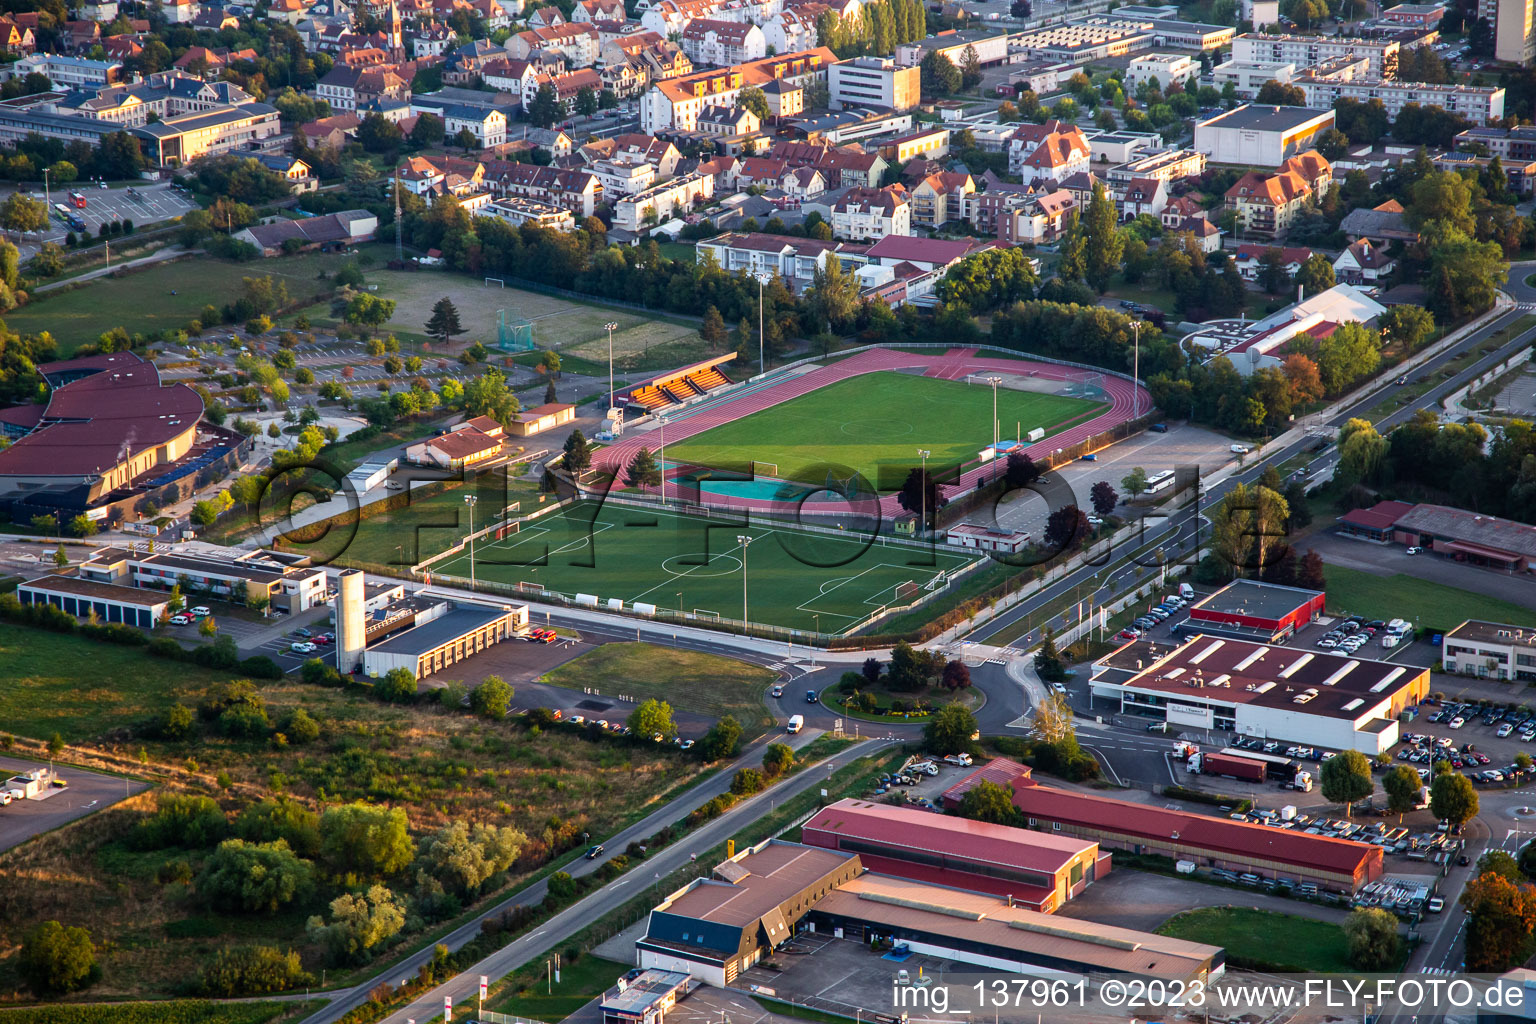 Terrain de Football Synthetique in Obernai im Bundesland Bas-Rhin, Frankreich